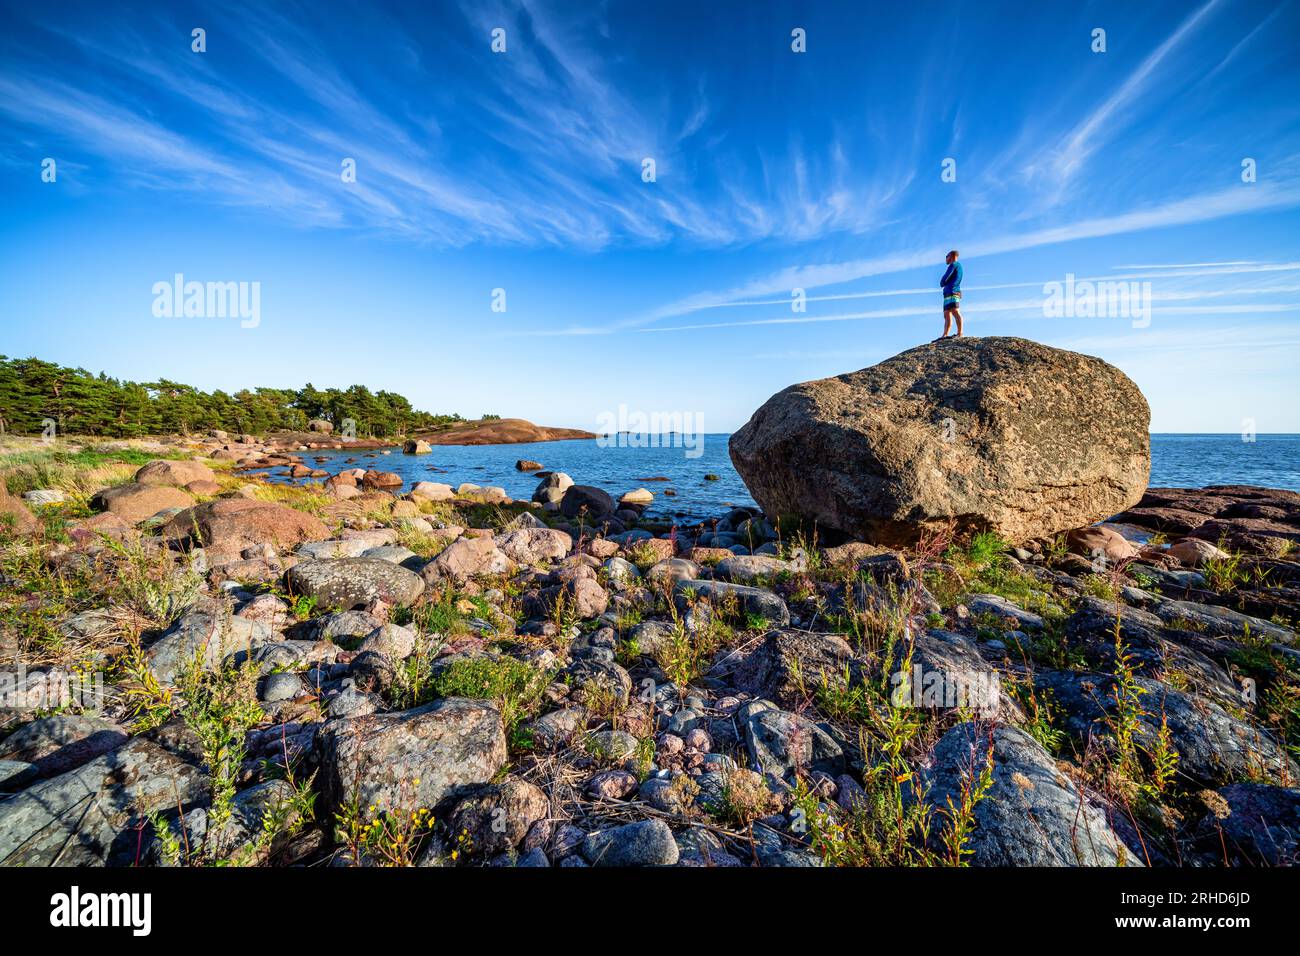 Standing on a big boulder at Äggskär islands, Porvoo, Finland Stock Photo